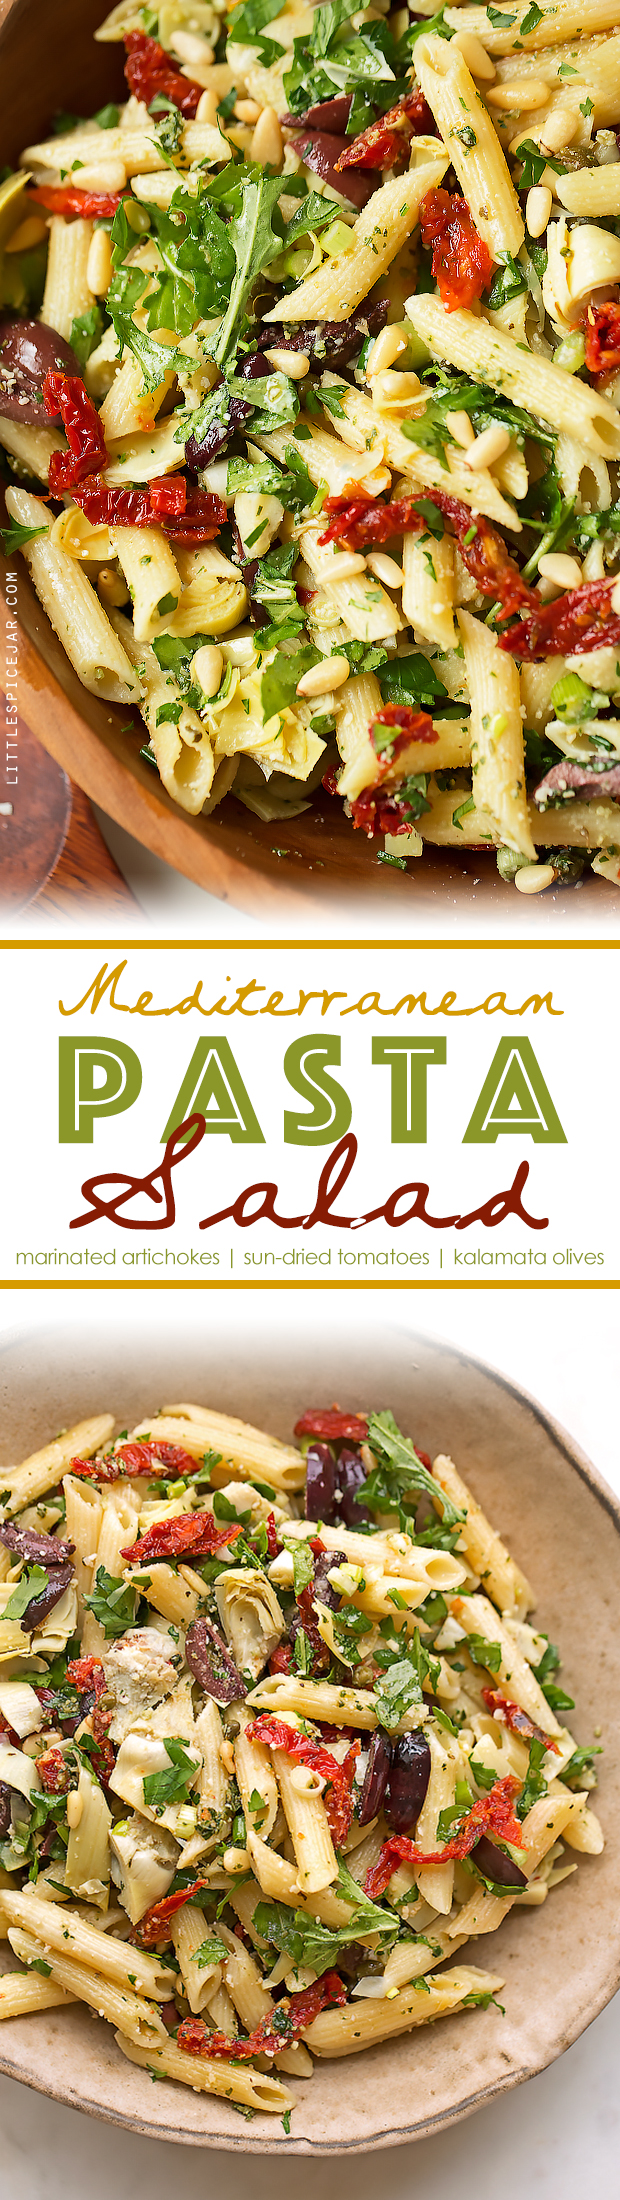 Mediterranean-Pasta-Salad-5